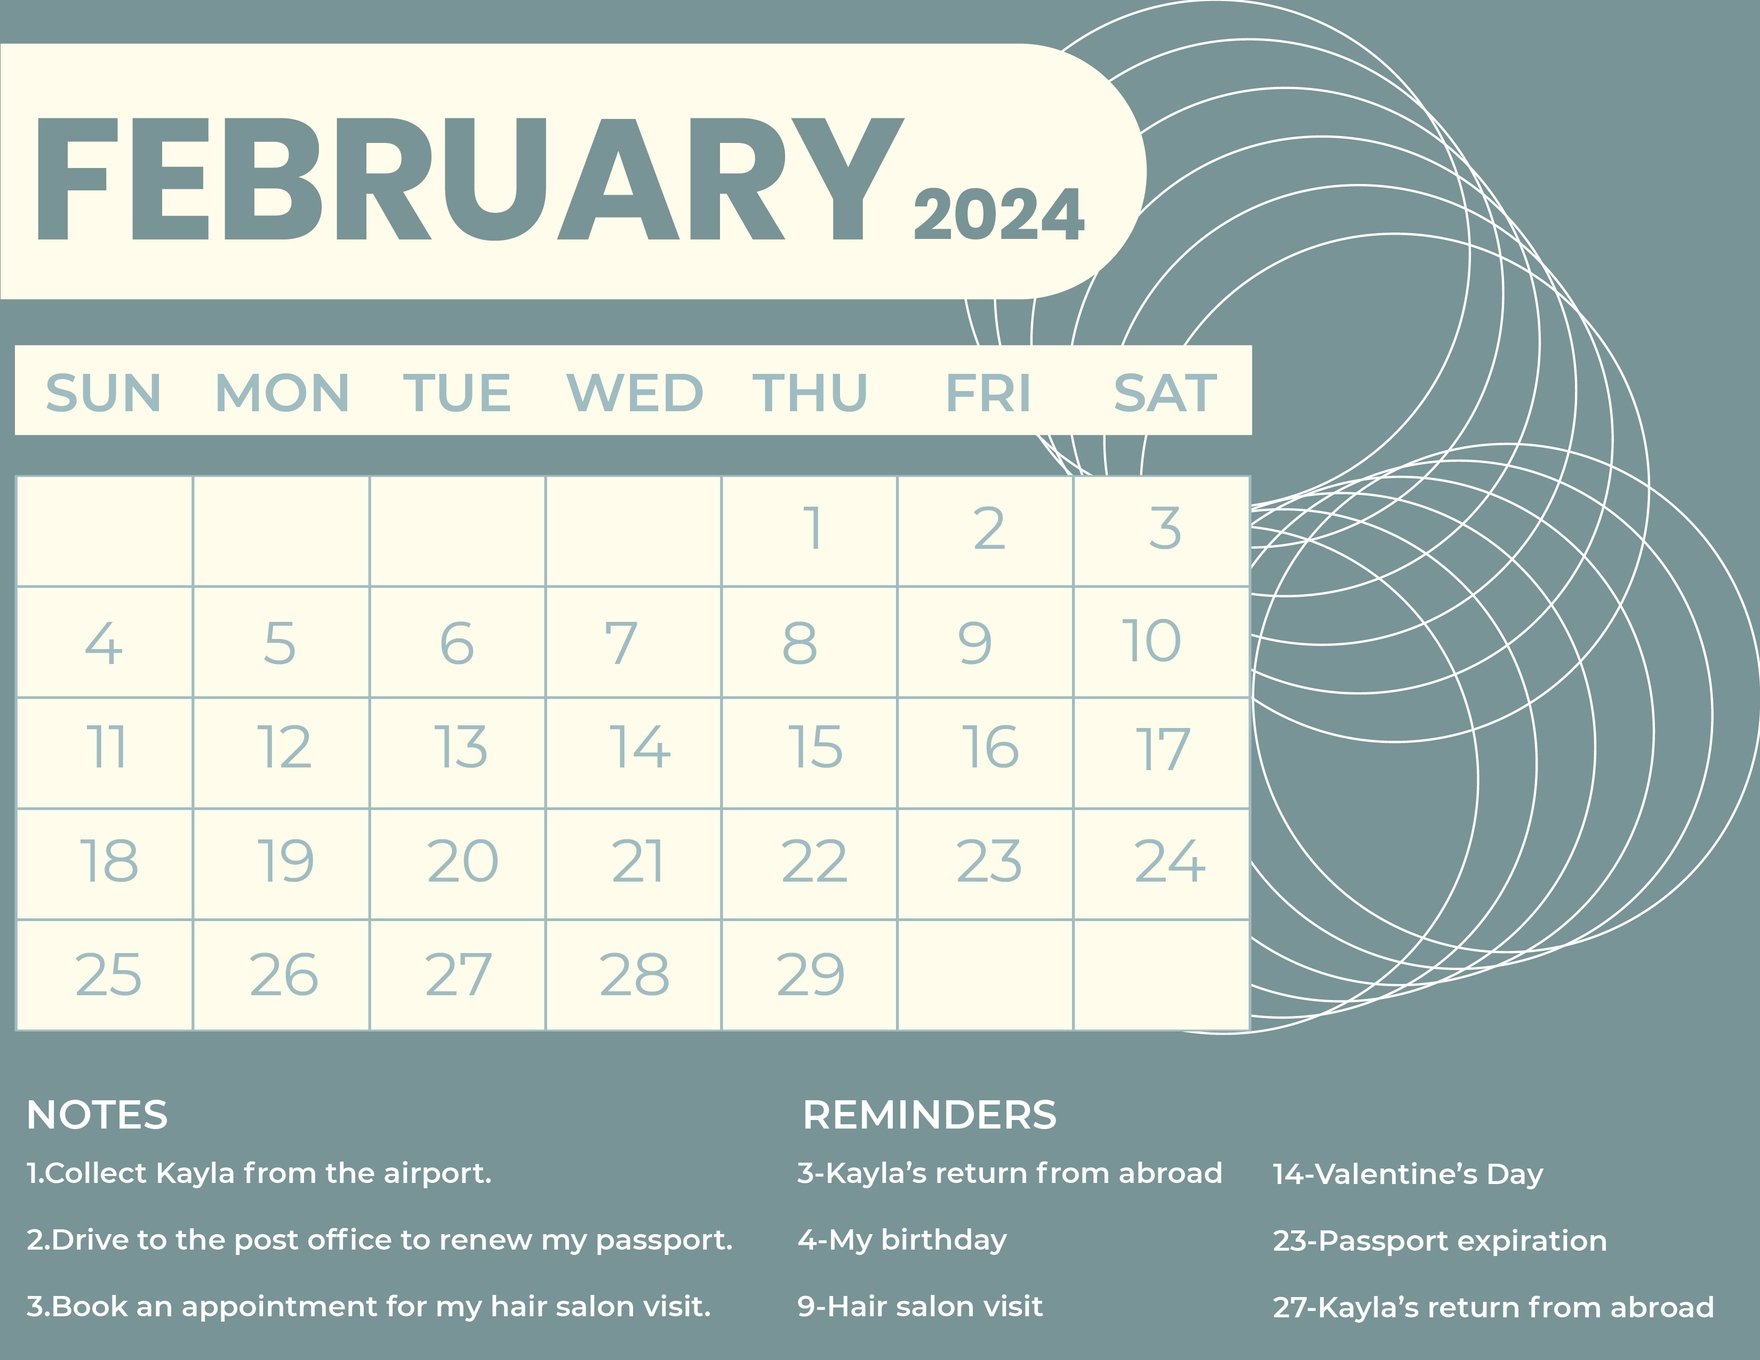 February 2024 Calendar Template Word 2021 Disney World Crowd Calendar